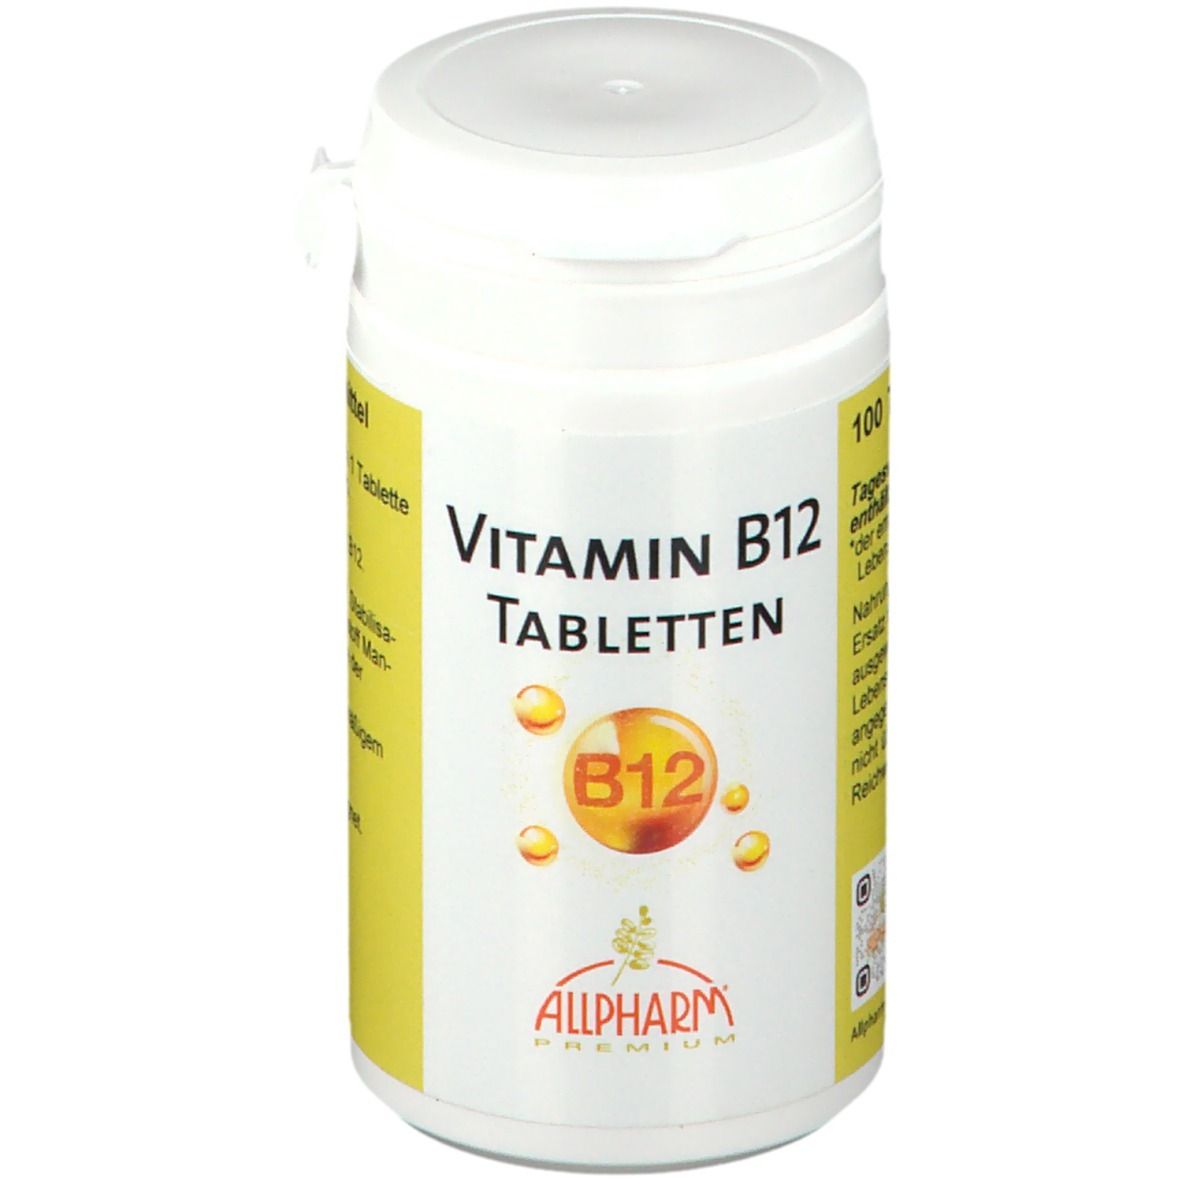 Allpharm Vitamin B12 Tabletten Premium